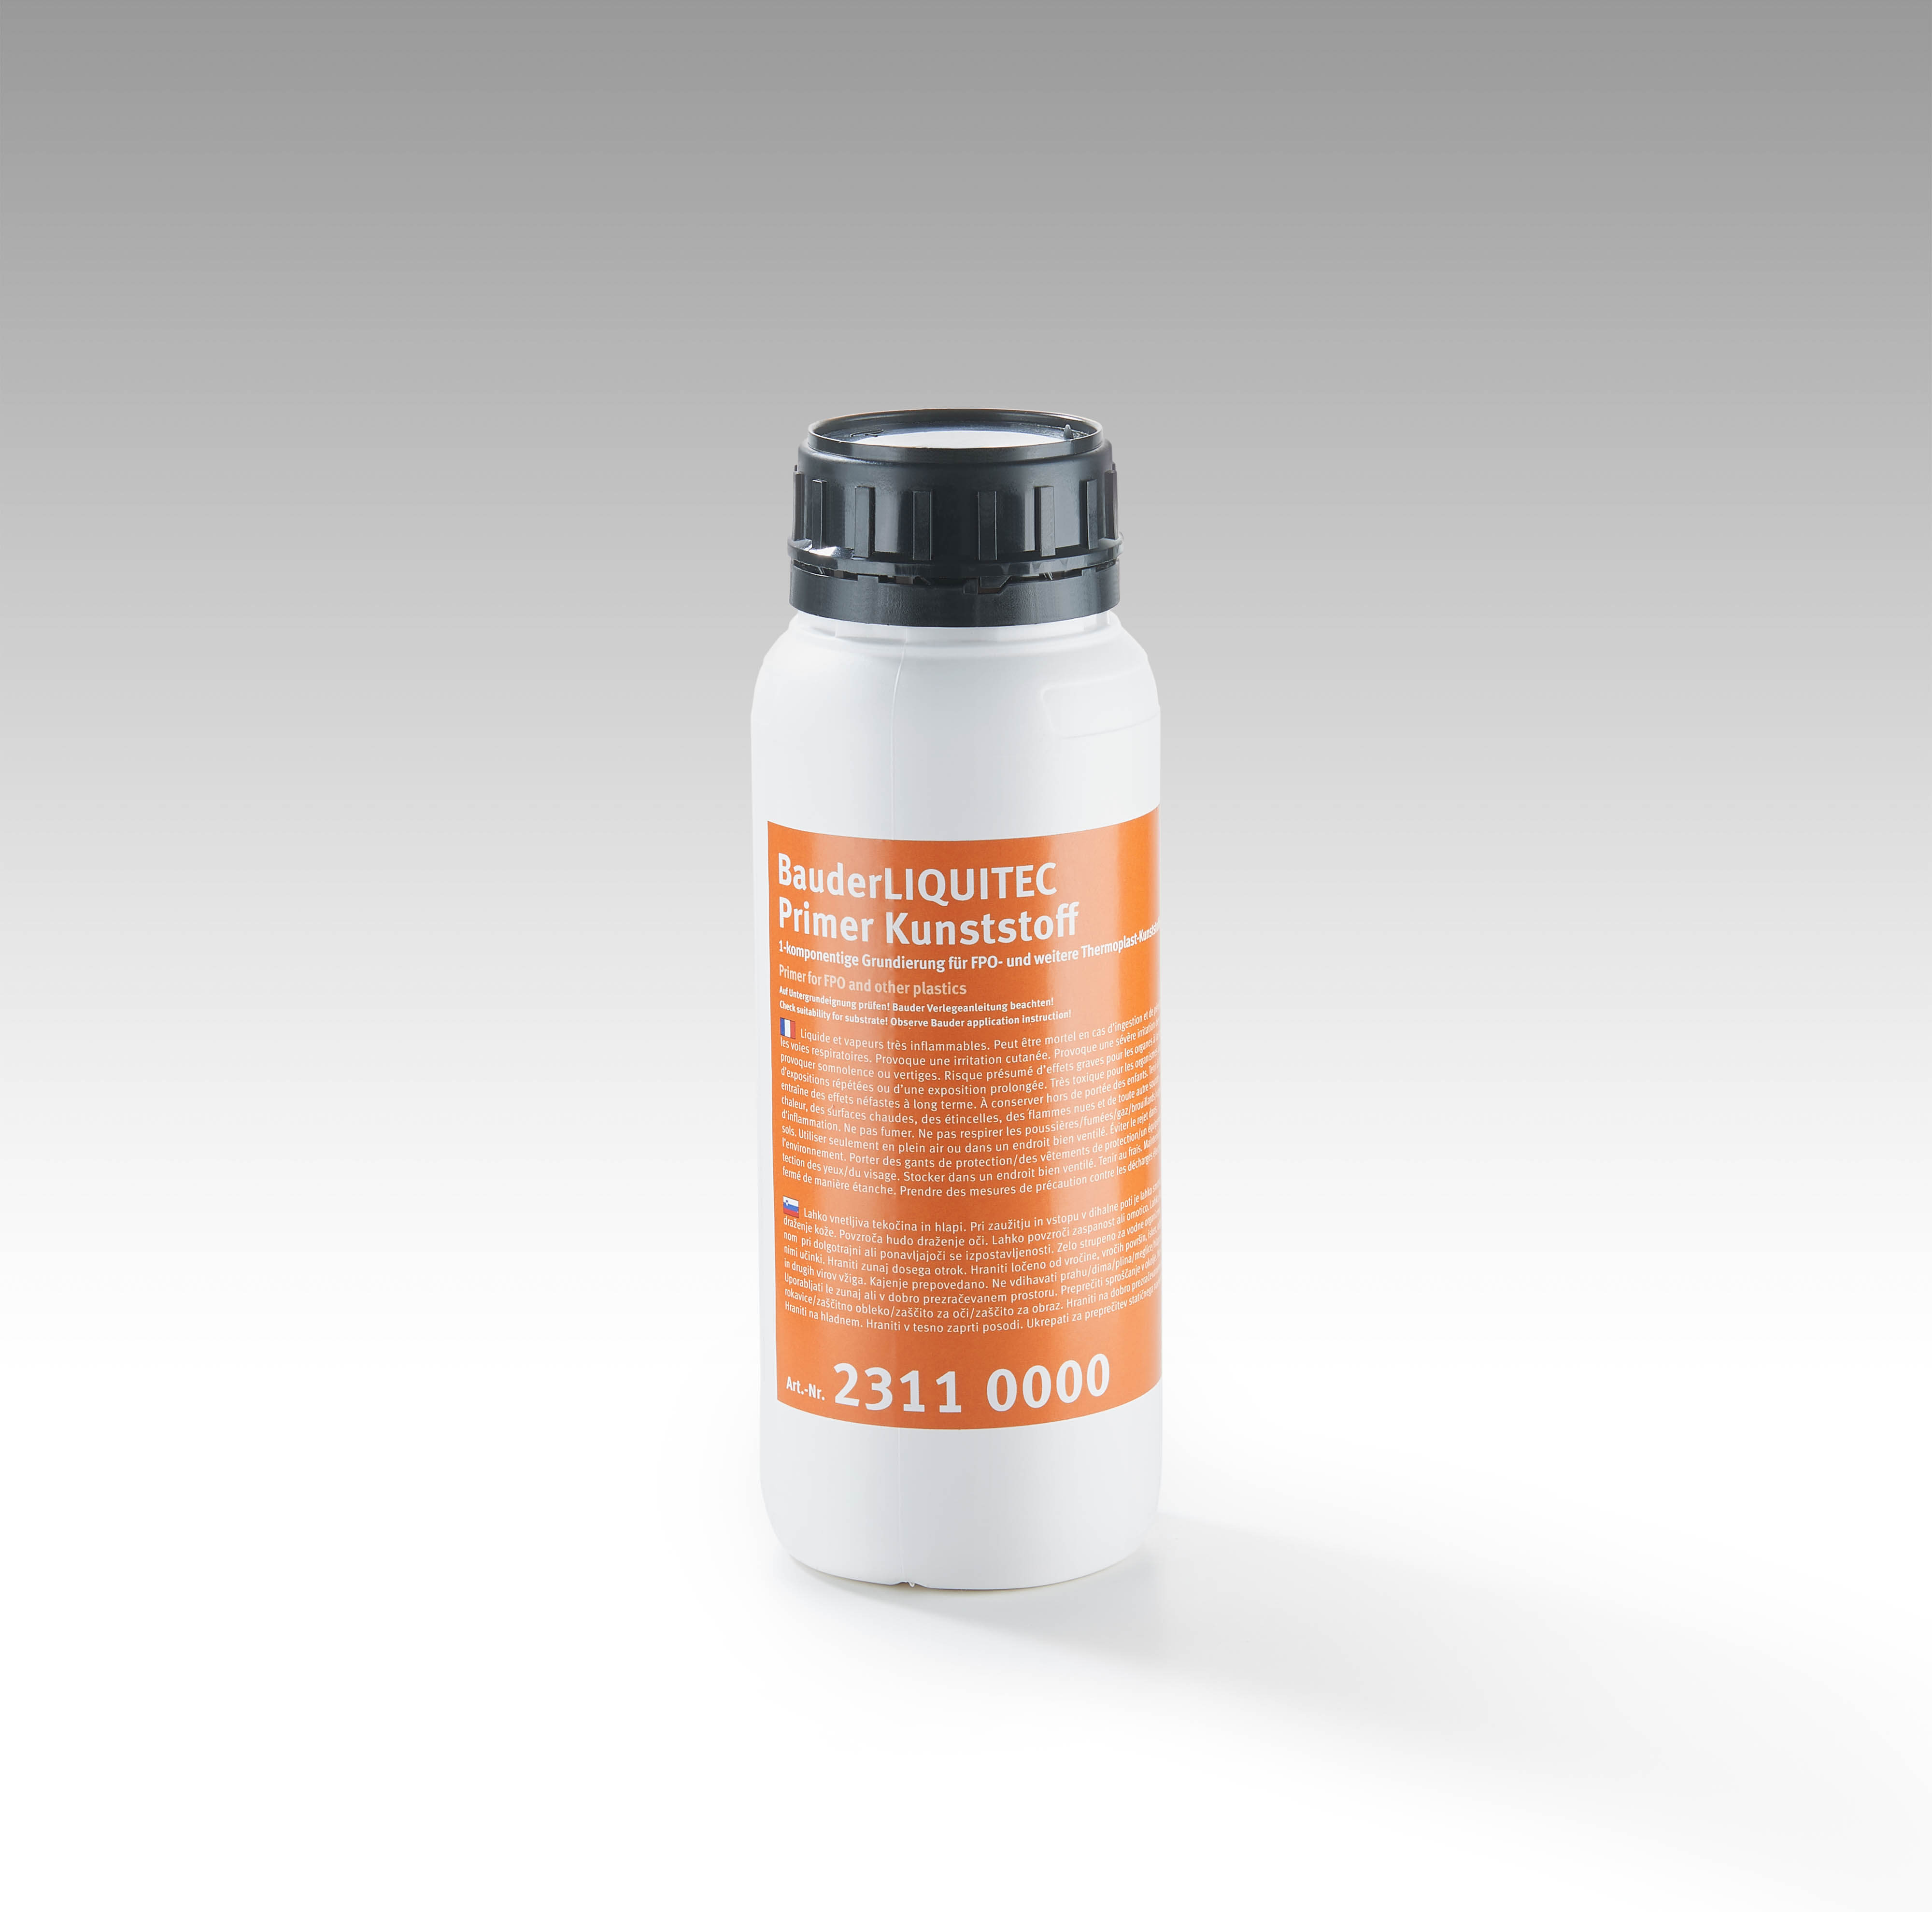 BauderLIQUITEC Primer Kunststoff für PU/PMMA 0,4 kg